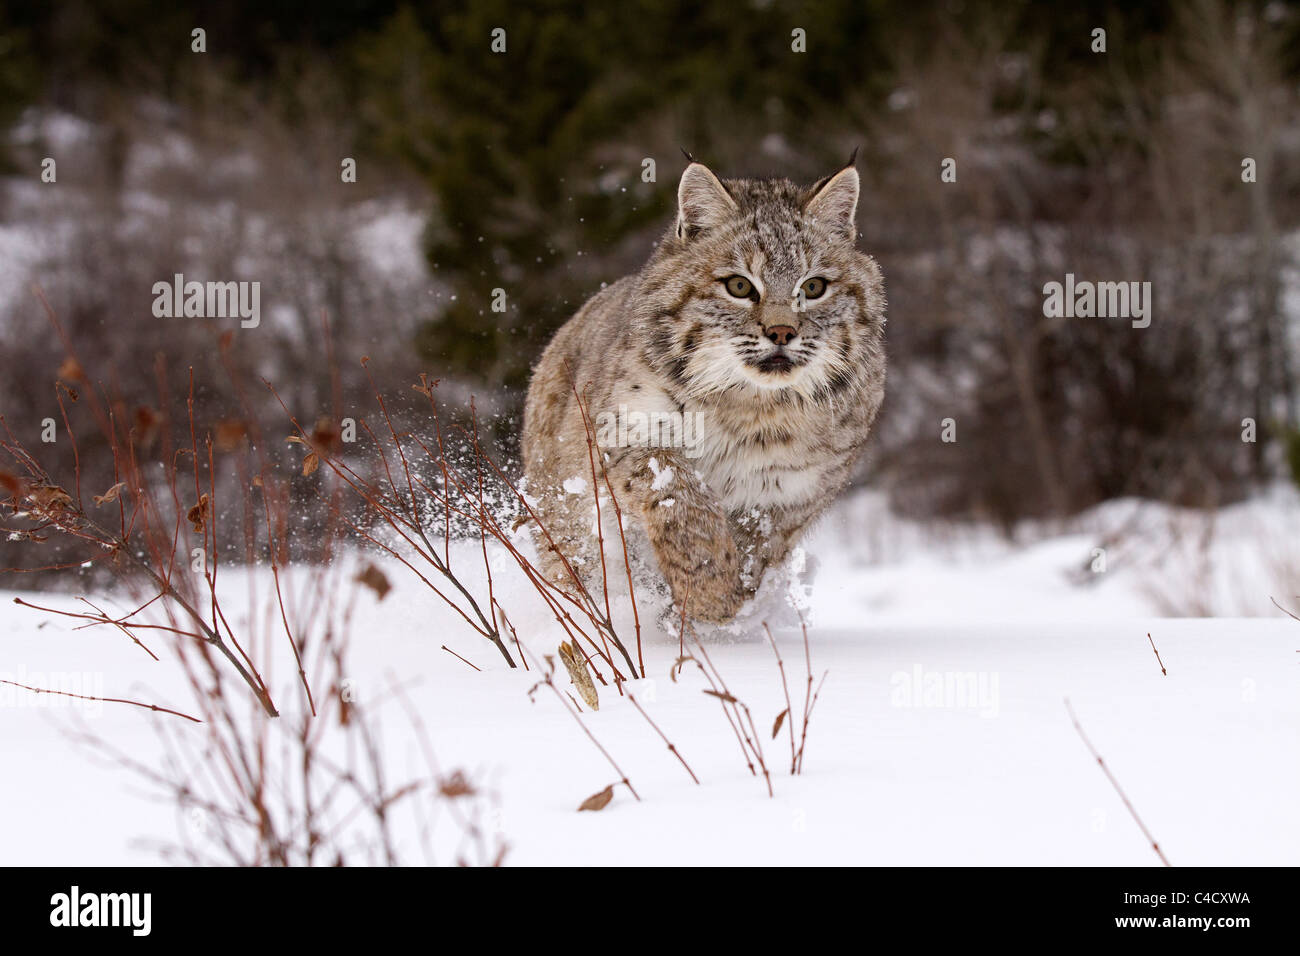 Bobcat, Felis rufus running through the snow Stock Photo